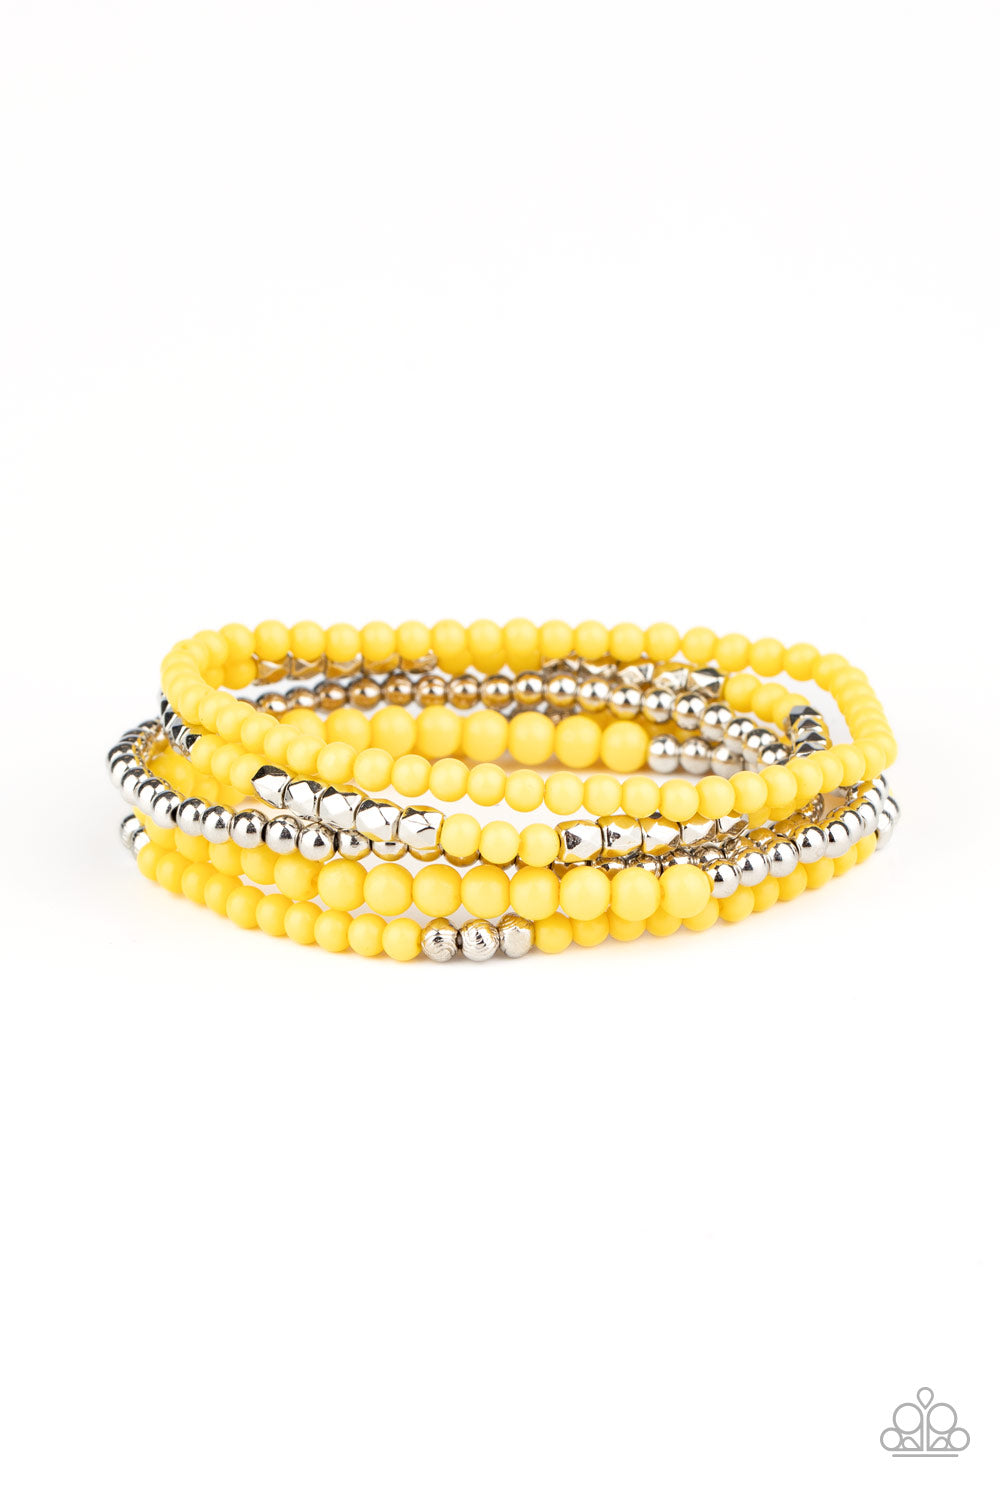 Stacked Showcase - Yellow bracelet B037